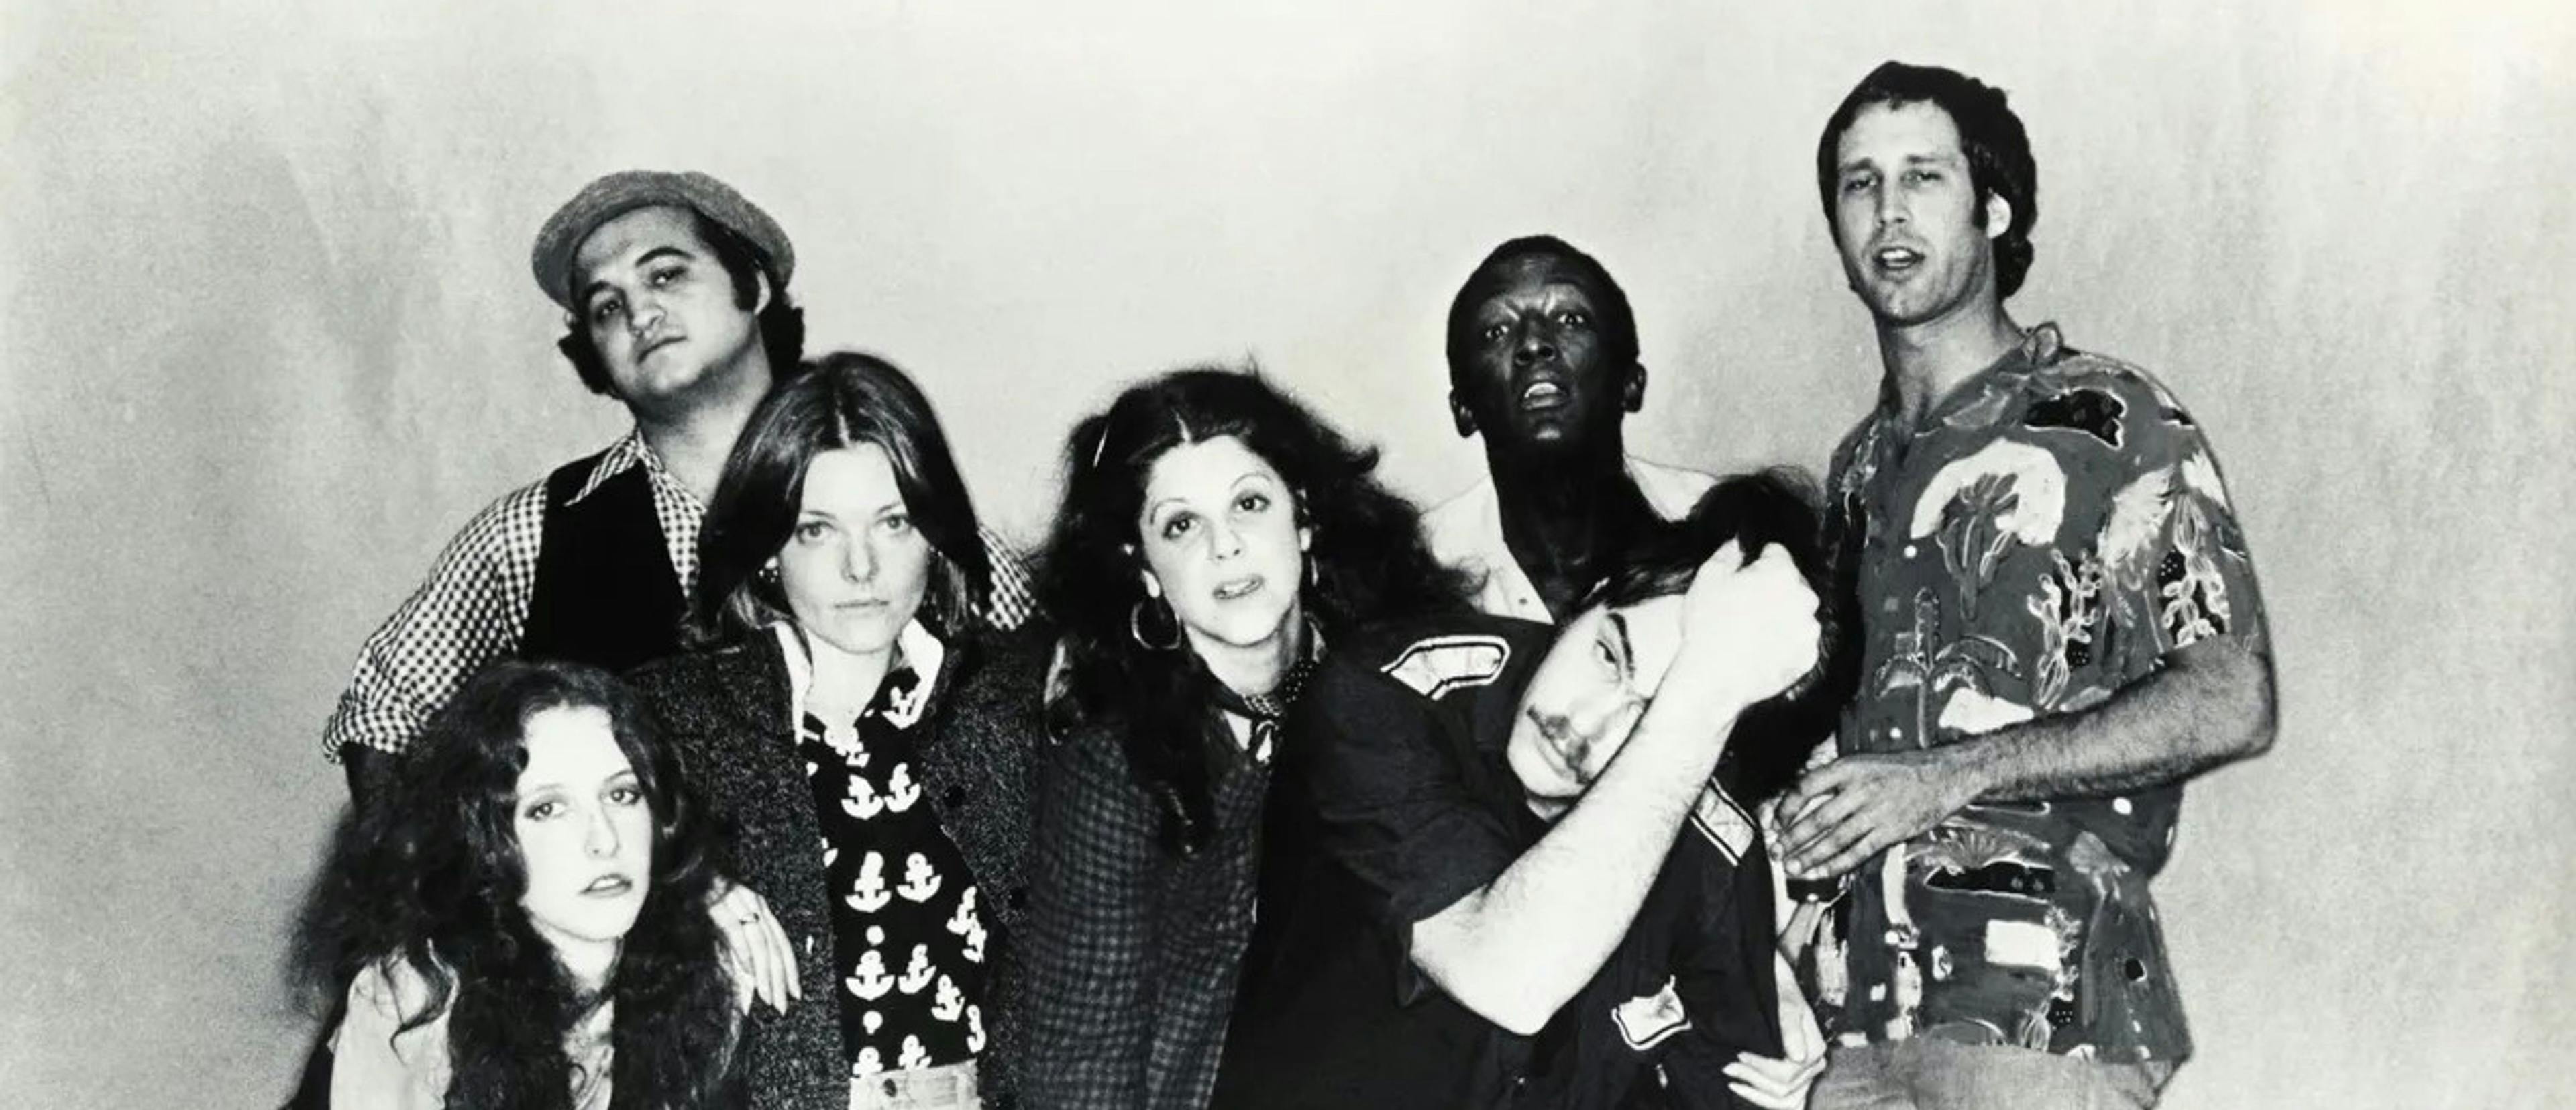 El reparto original de 'Saturday Night Live', con Laraine Newman, John Belushi, Jane Curtin, Gilda Radner, Garrett Morris, Dan Aykroyd y Chevy Chase.